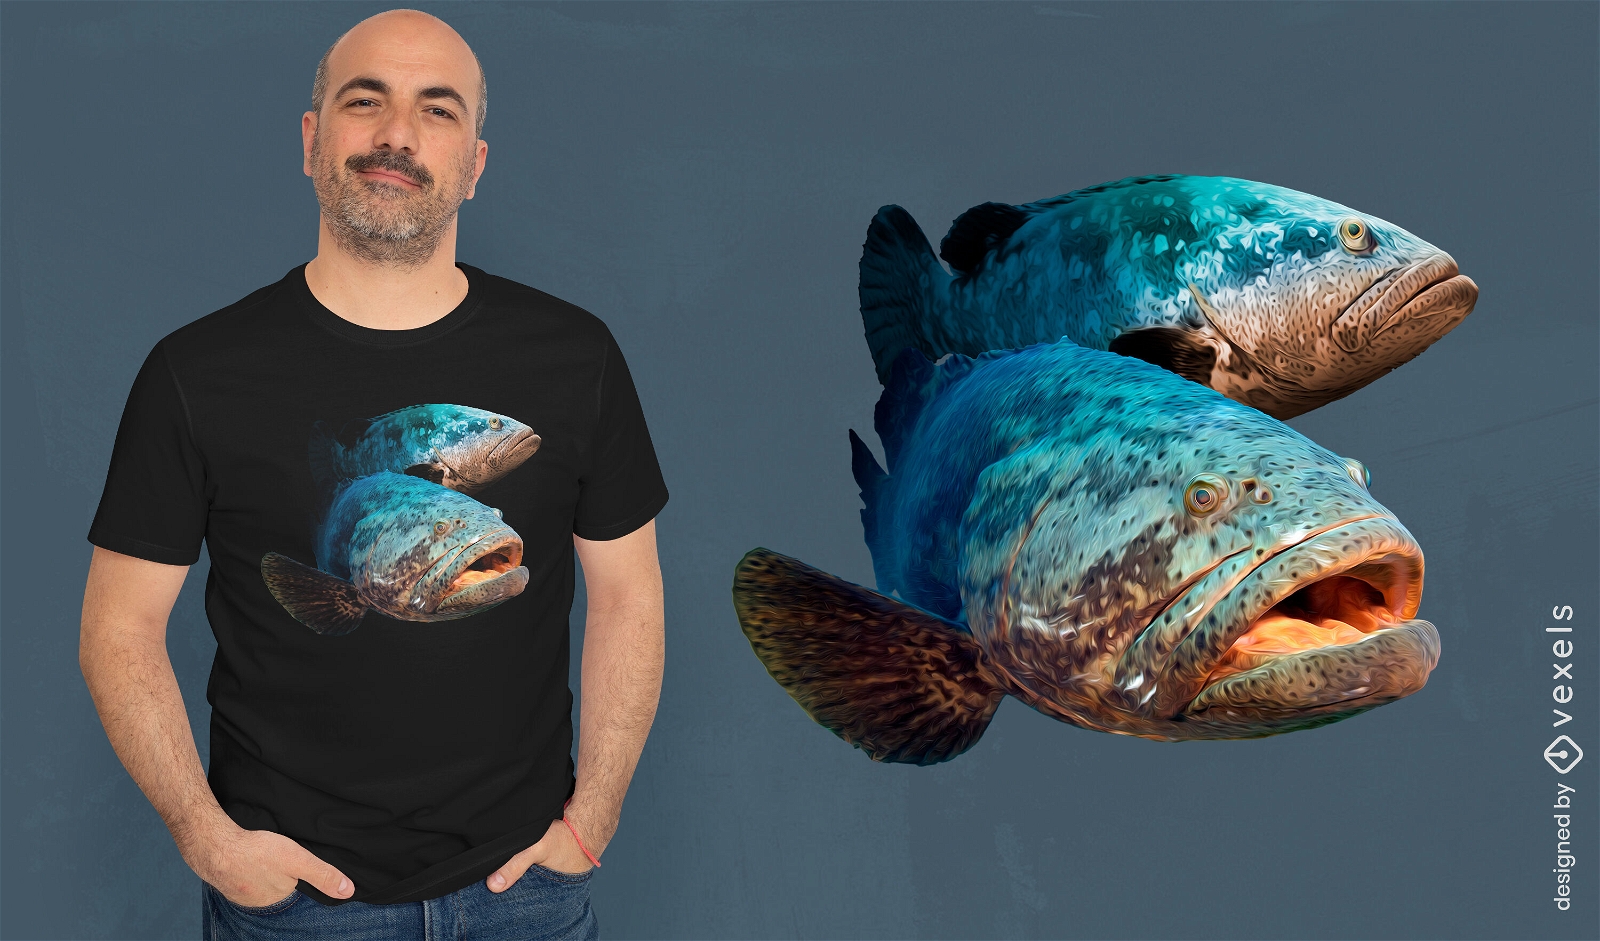 REQUEST Goliath grouper fish t-shirt design